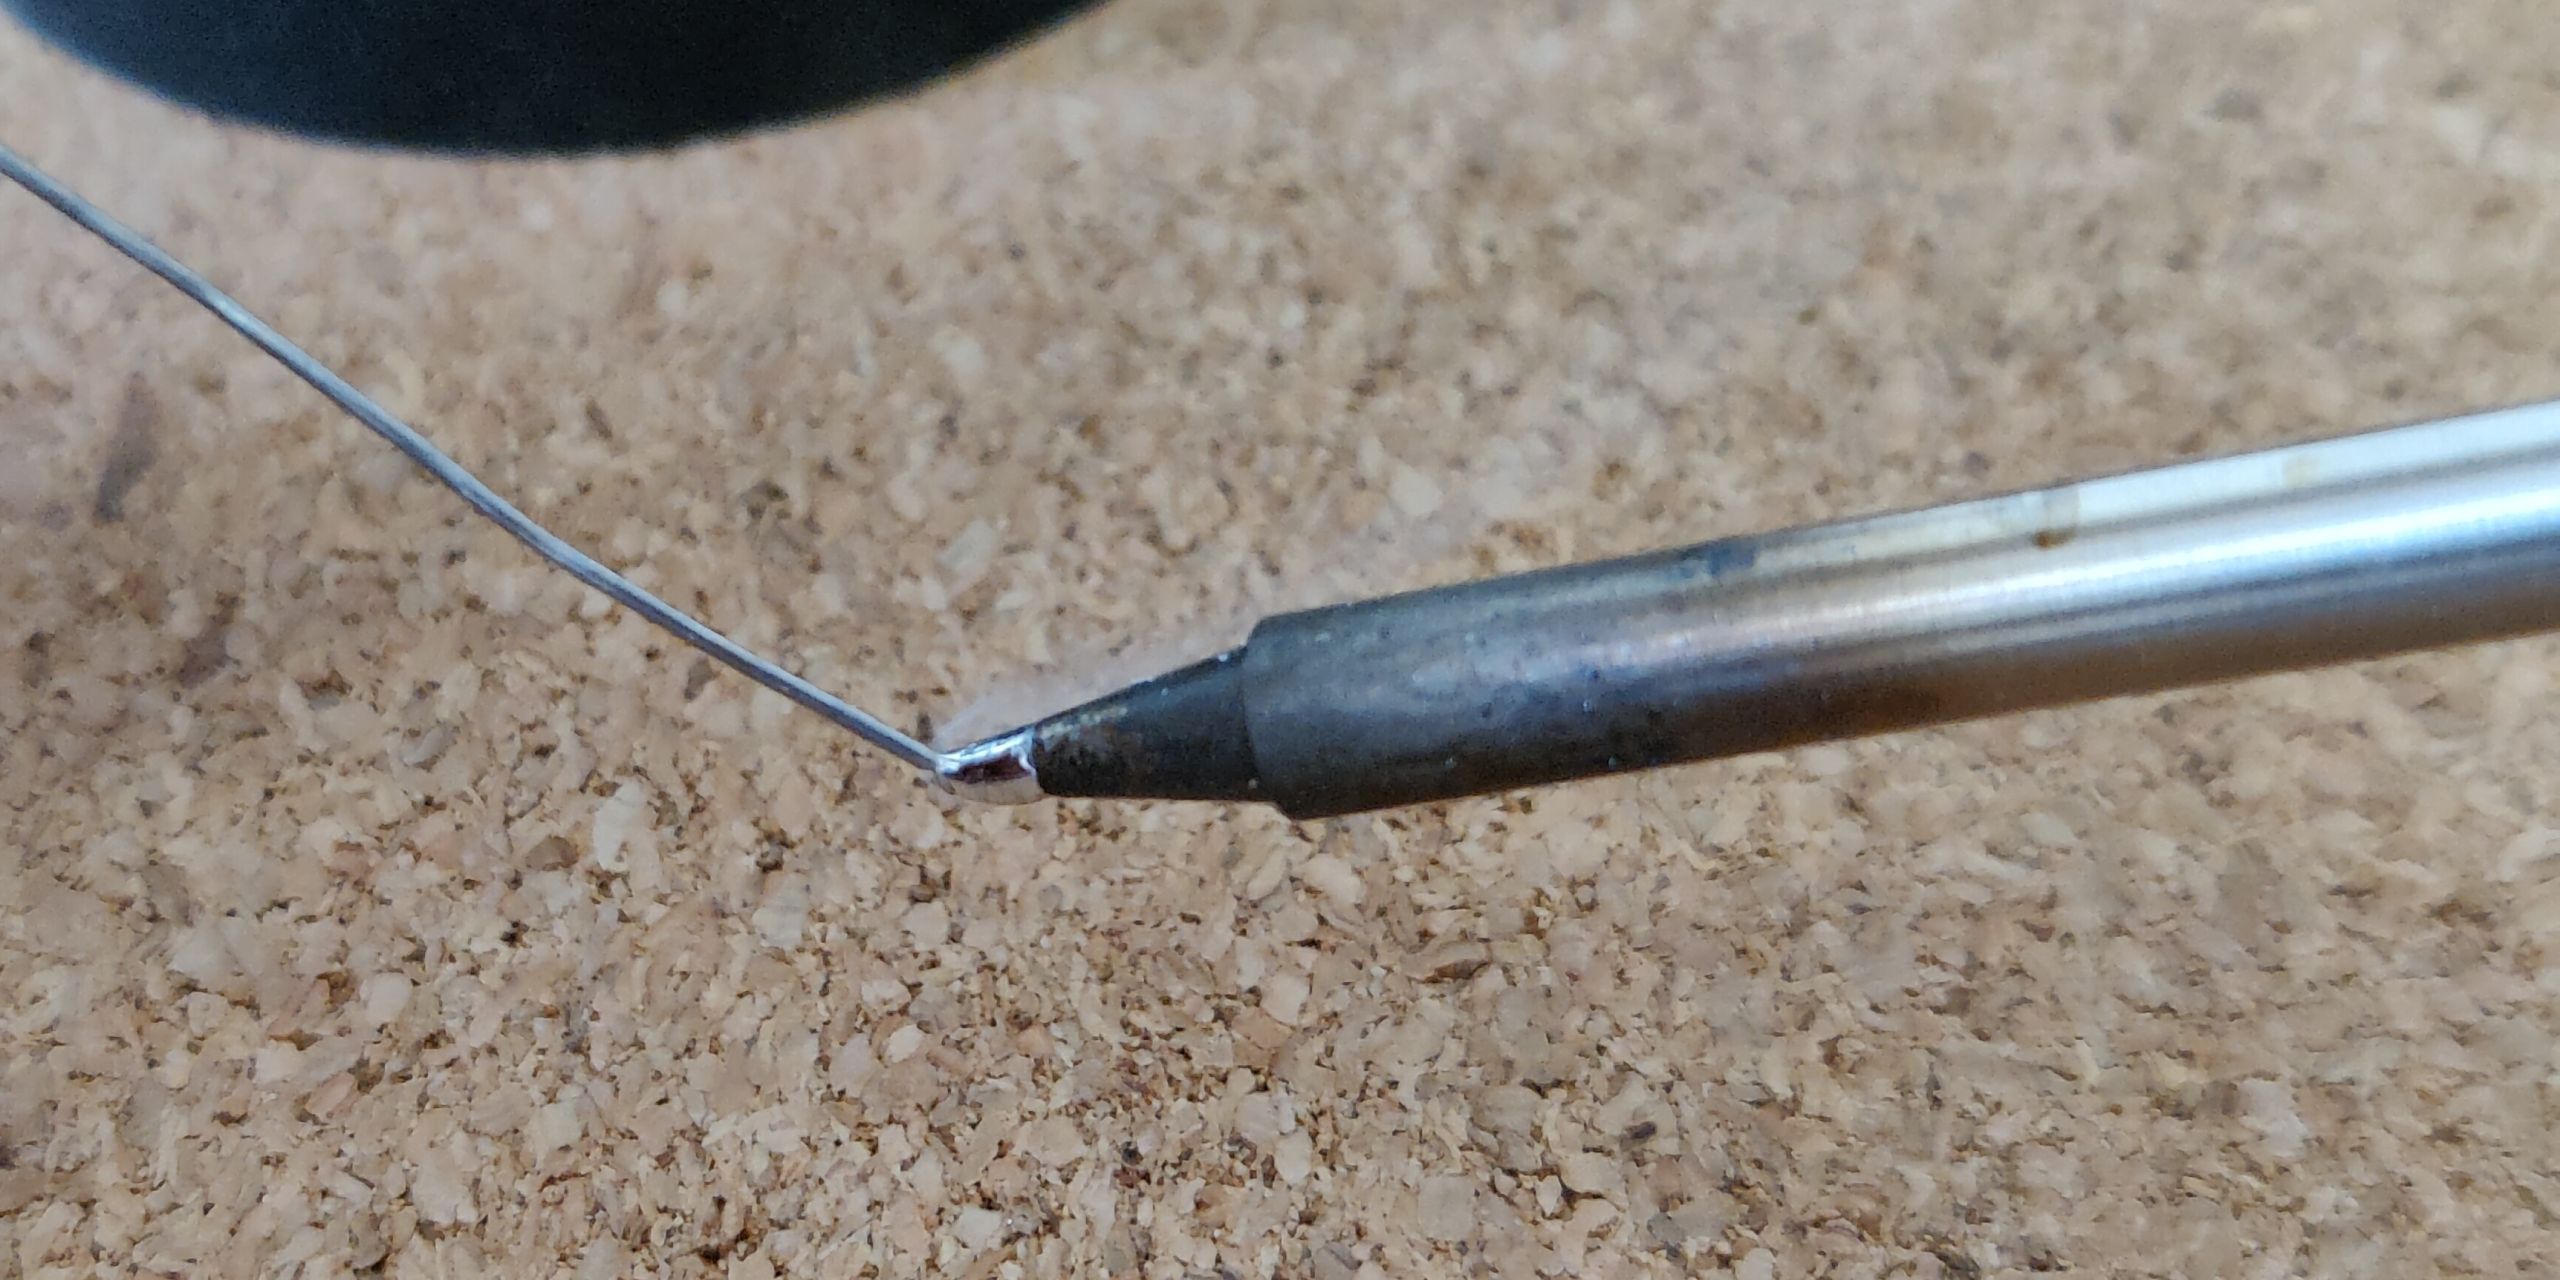 Melting solder onto the soldering iron tip